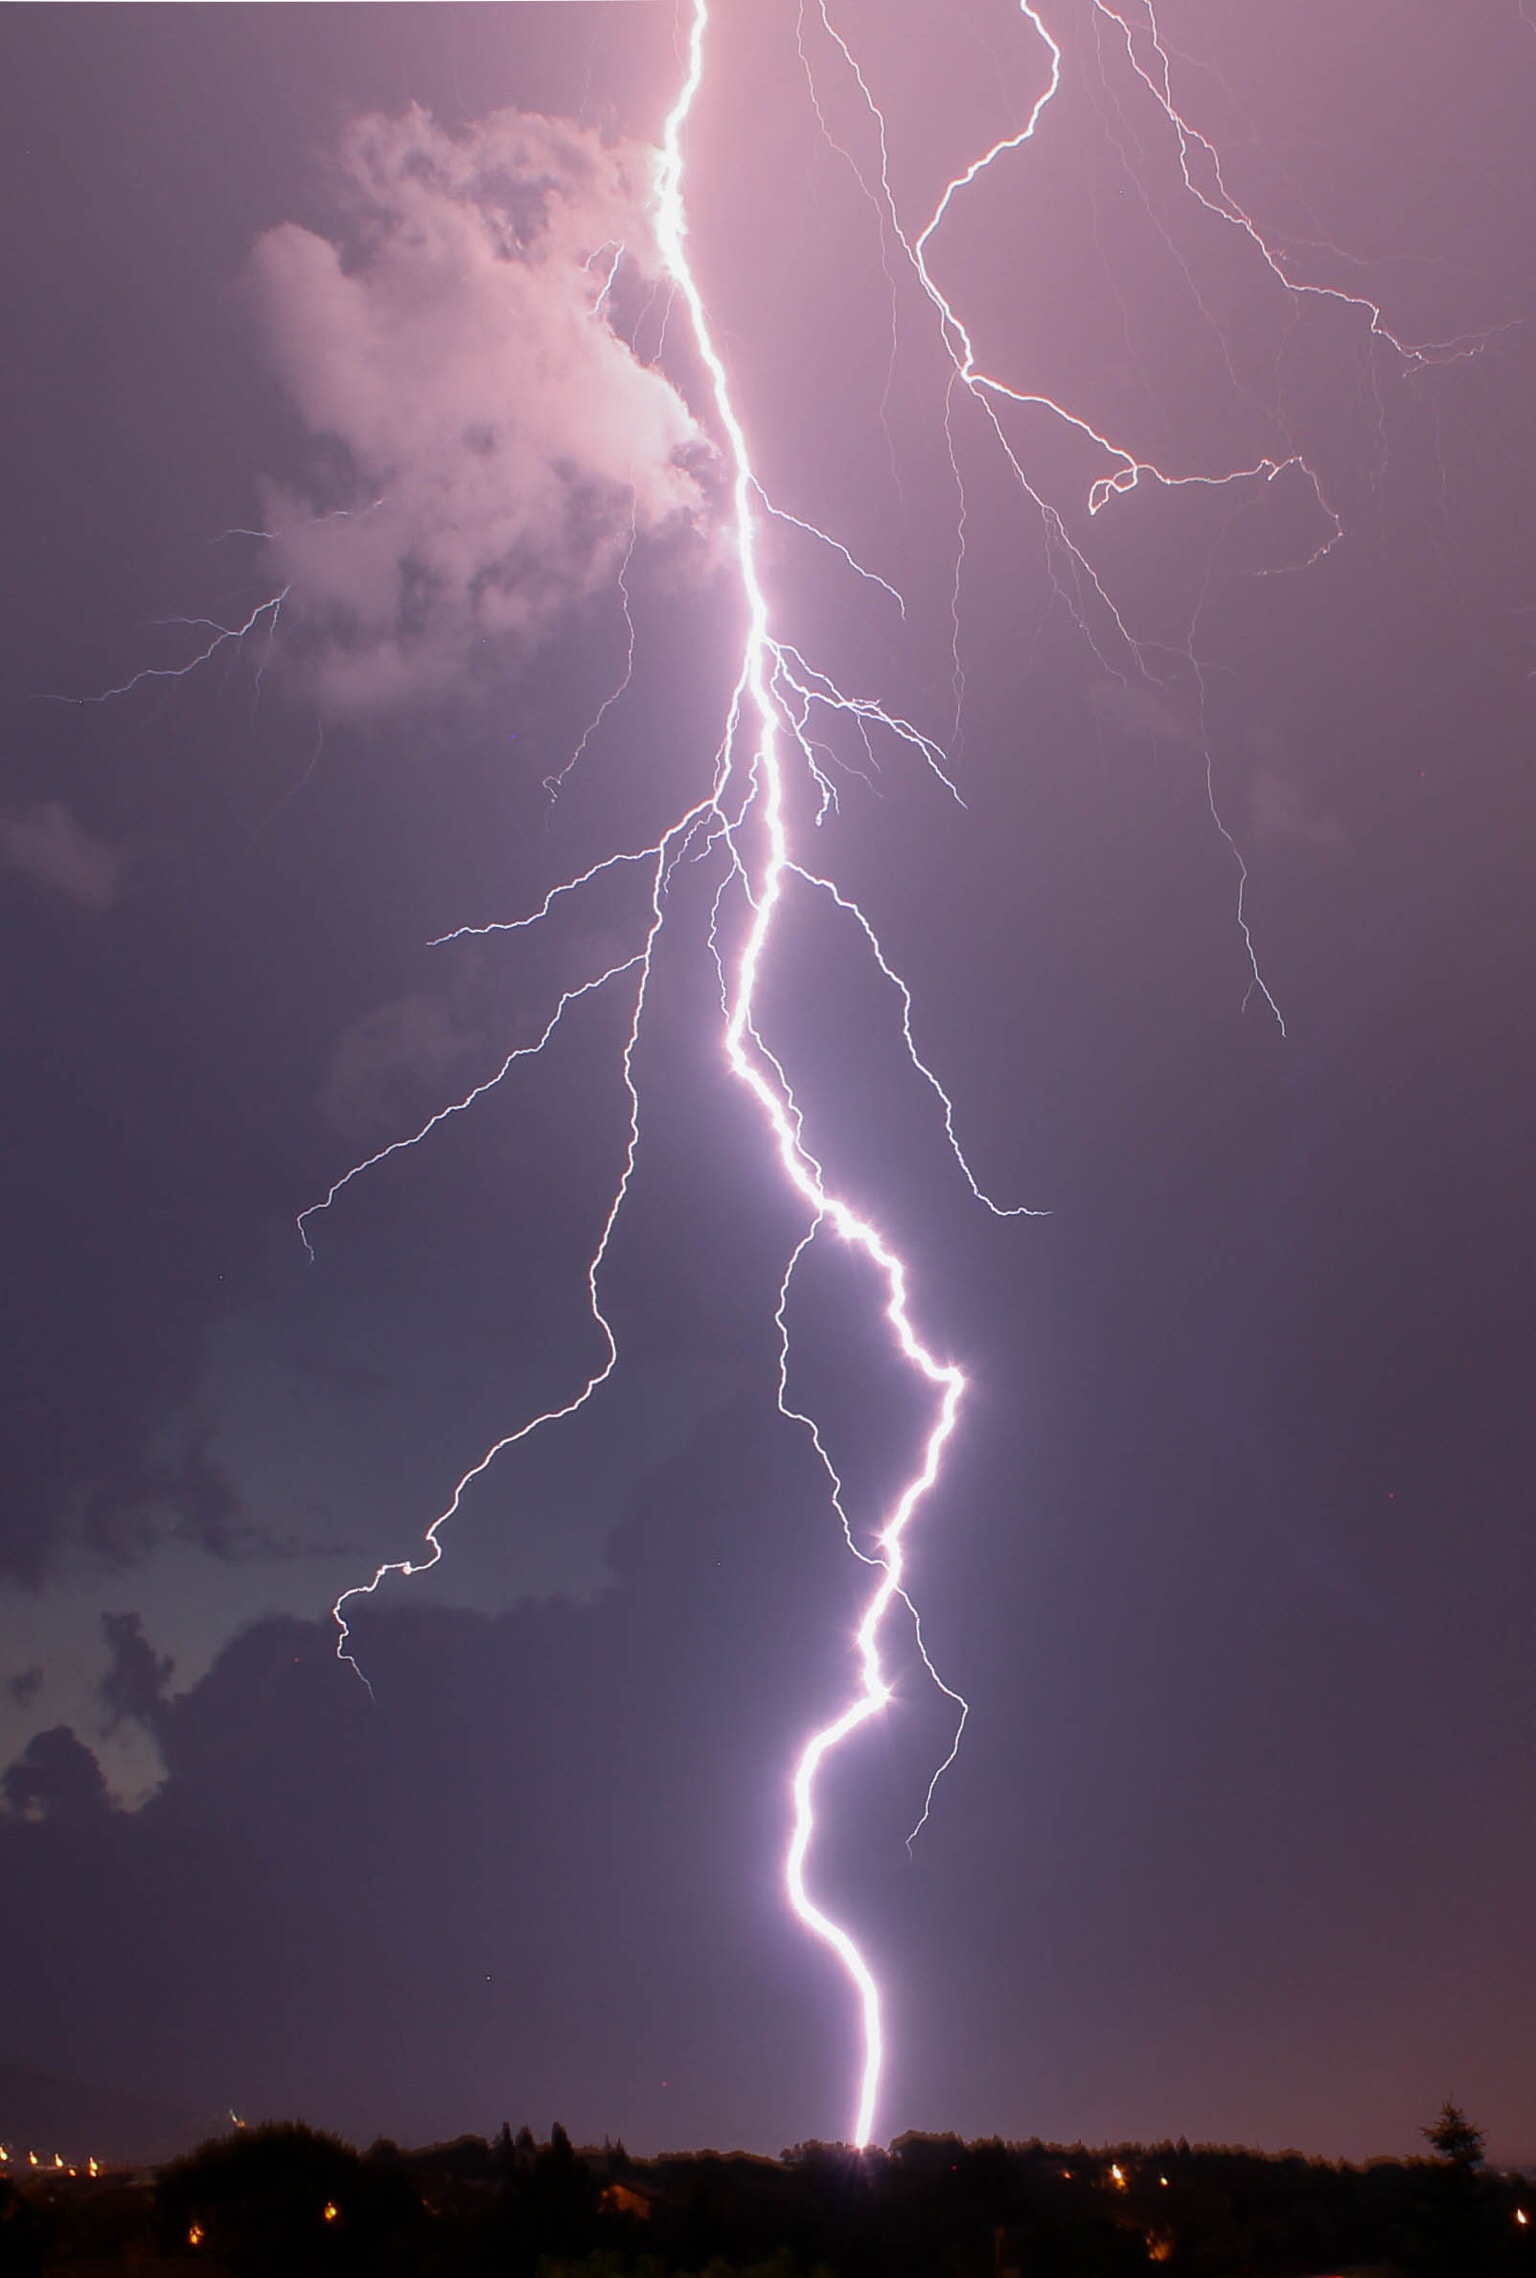 Forked Lightning depicting Extreme Weather